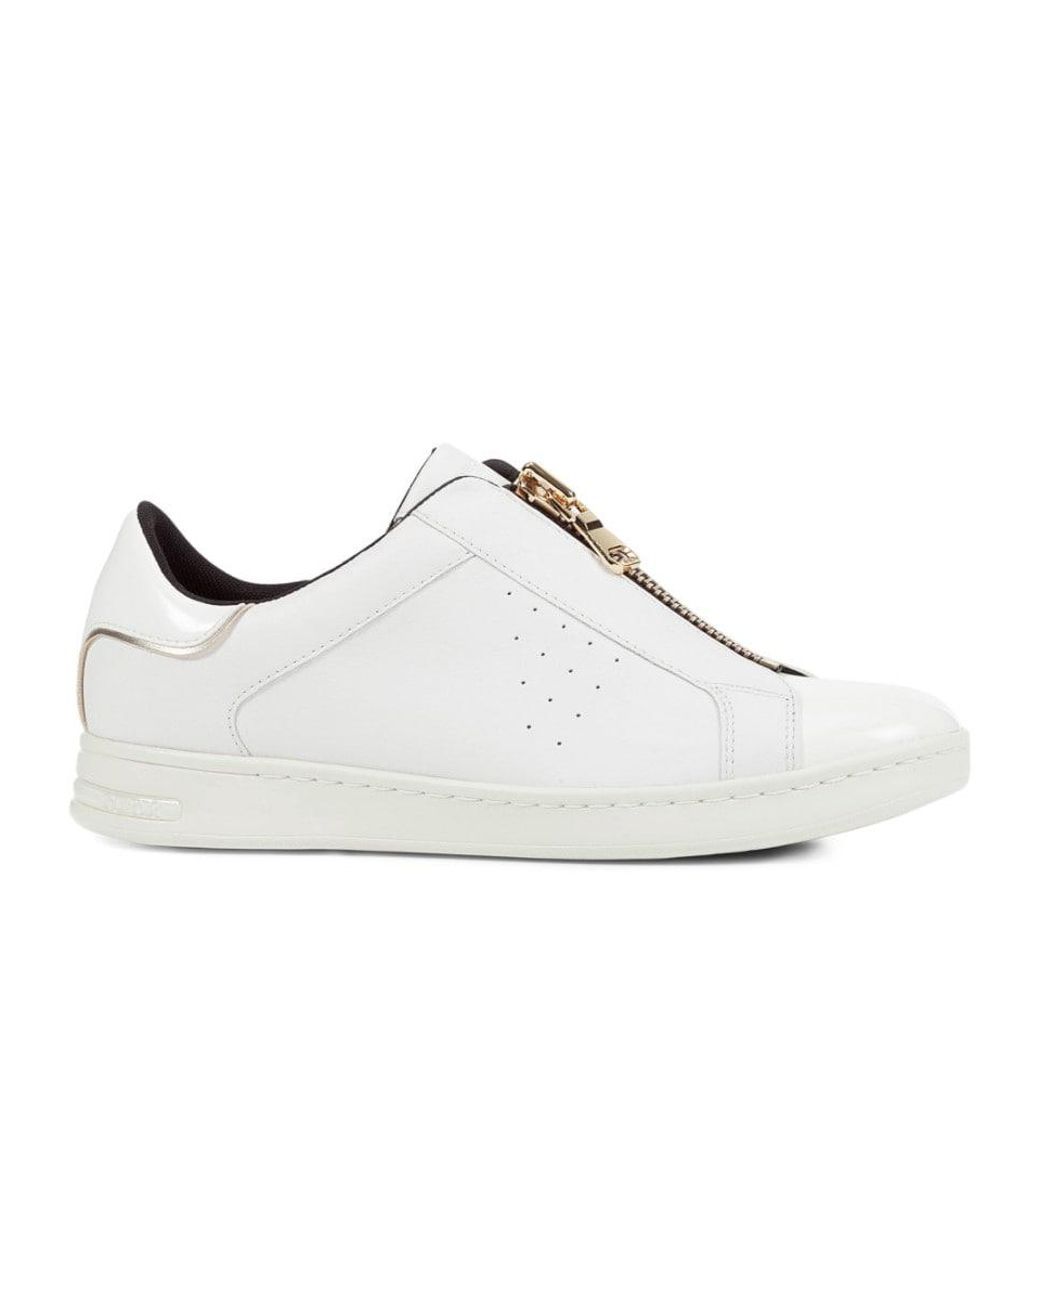 Geox Women's Jaysen Front-zip Sneakers White - Size (5) Lyst